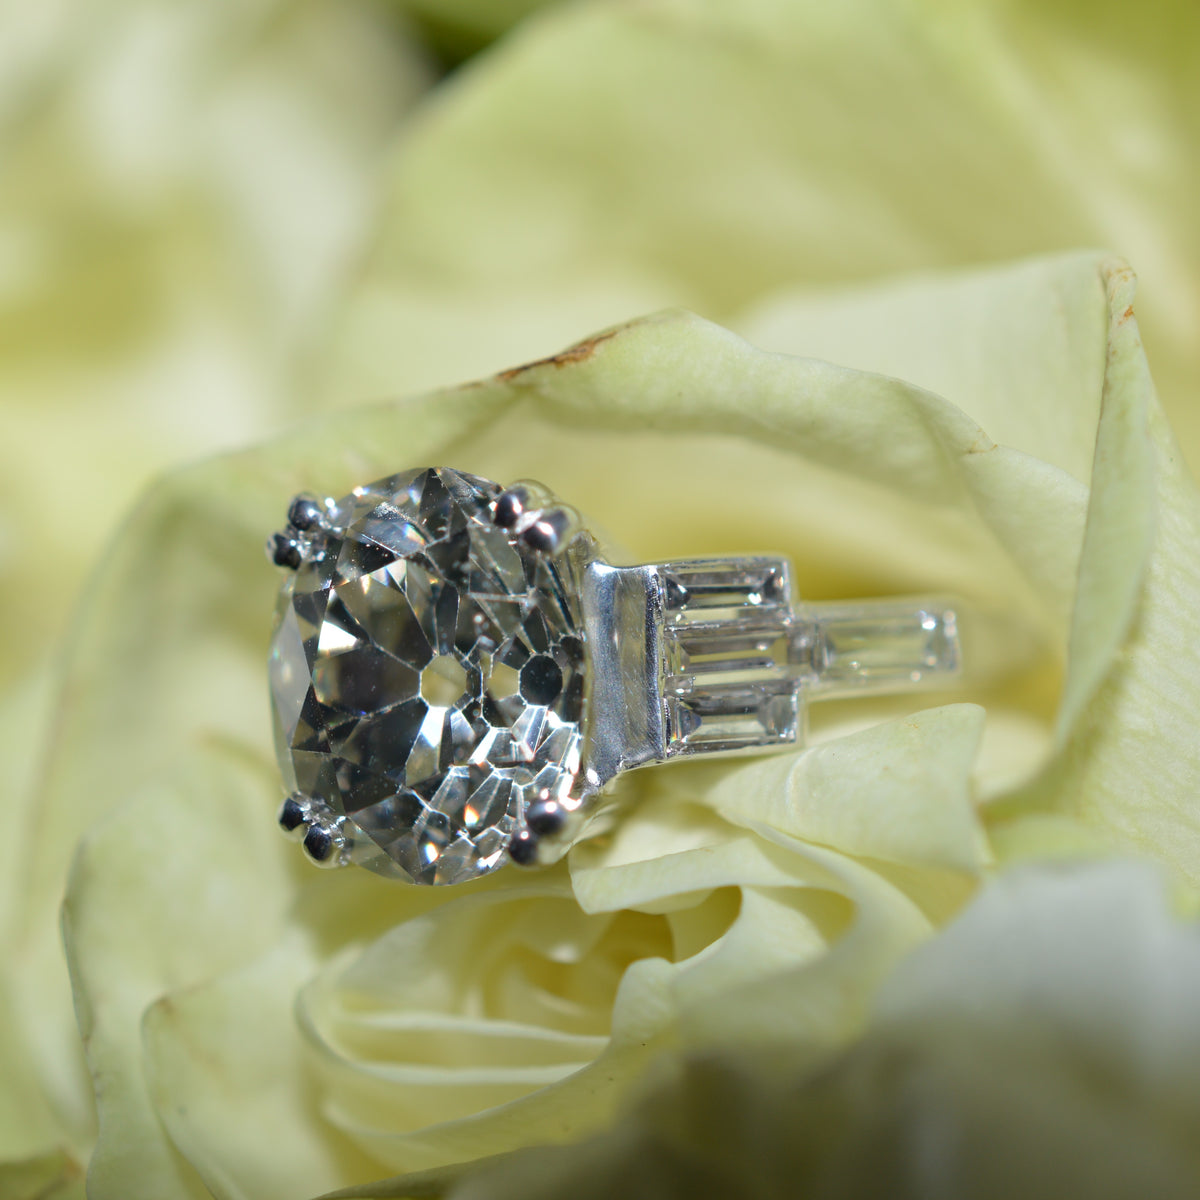 Breathtaking Platinum Art Deco Ring With A 3.71 Carat Old Mine Cut Diamond